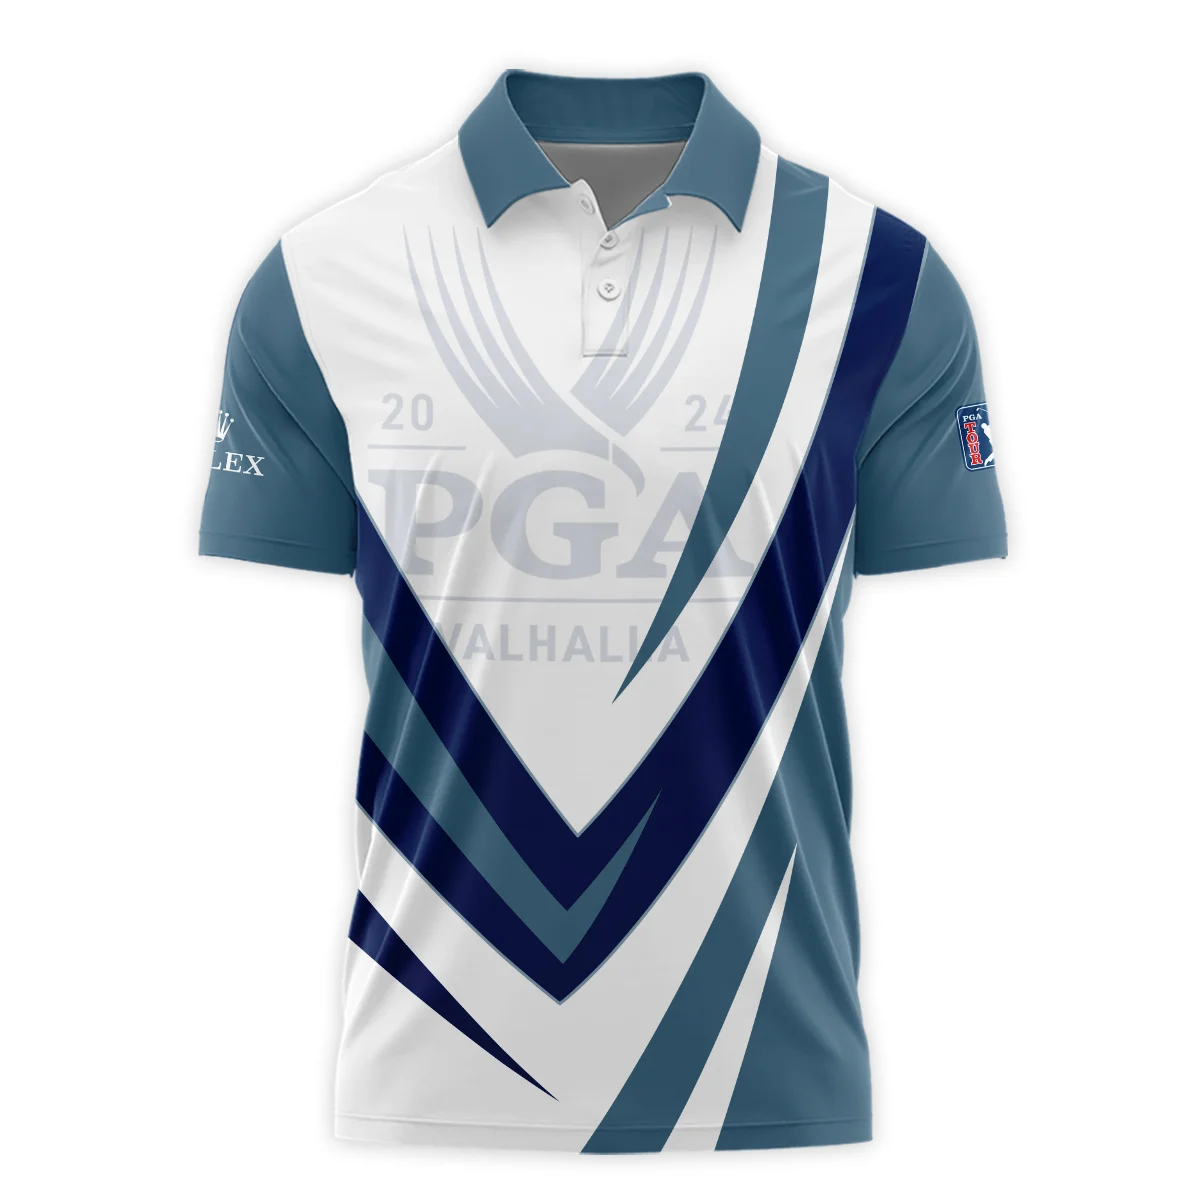 Rolex 2024 PGA Championship Valhalla Dark Moderate Blue White Blue Polo Shirt Style Classic Polo Shirt For Men